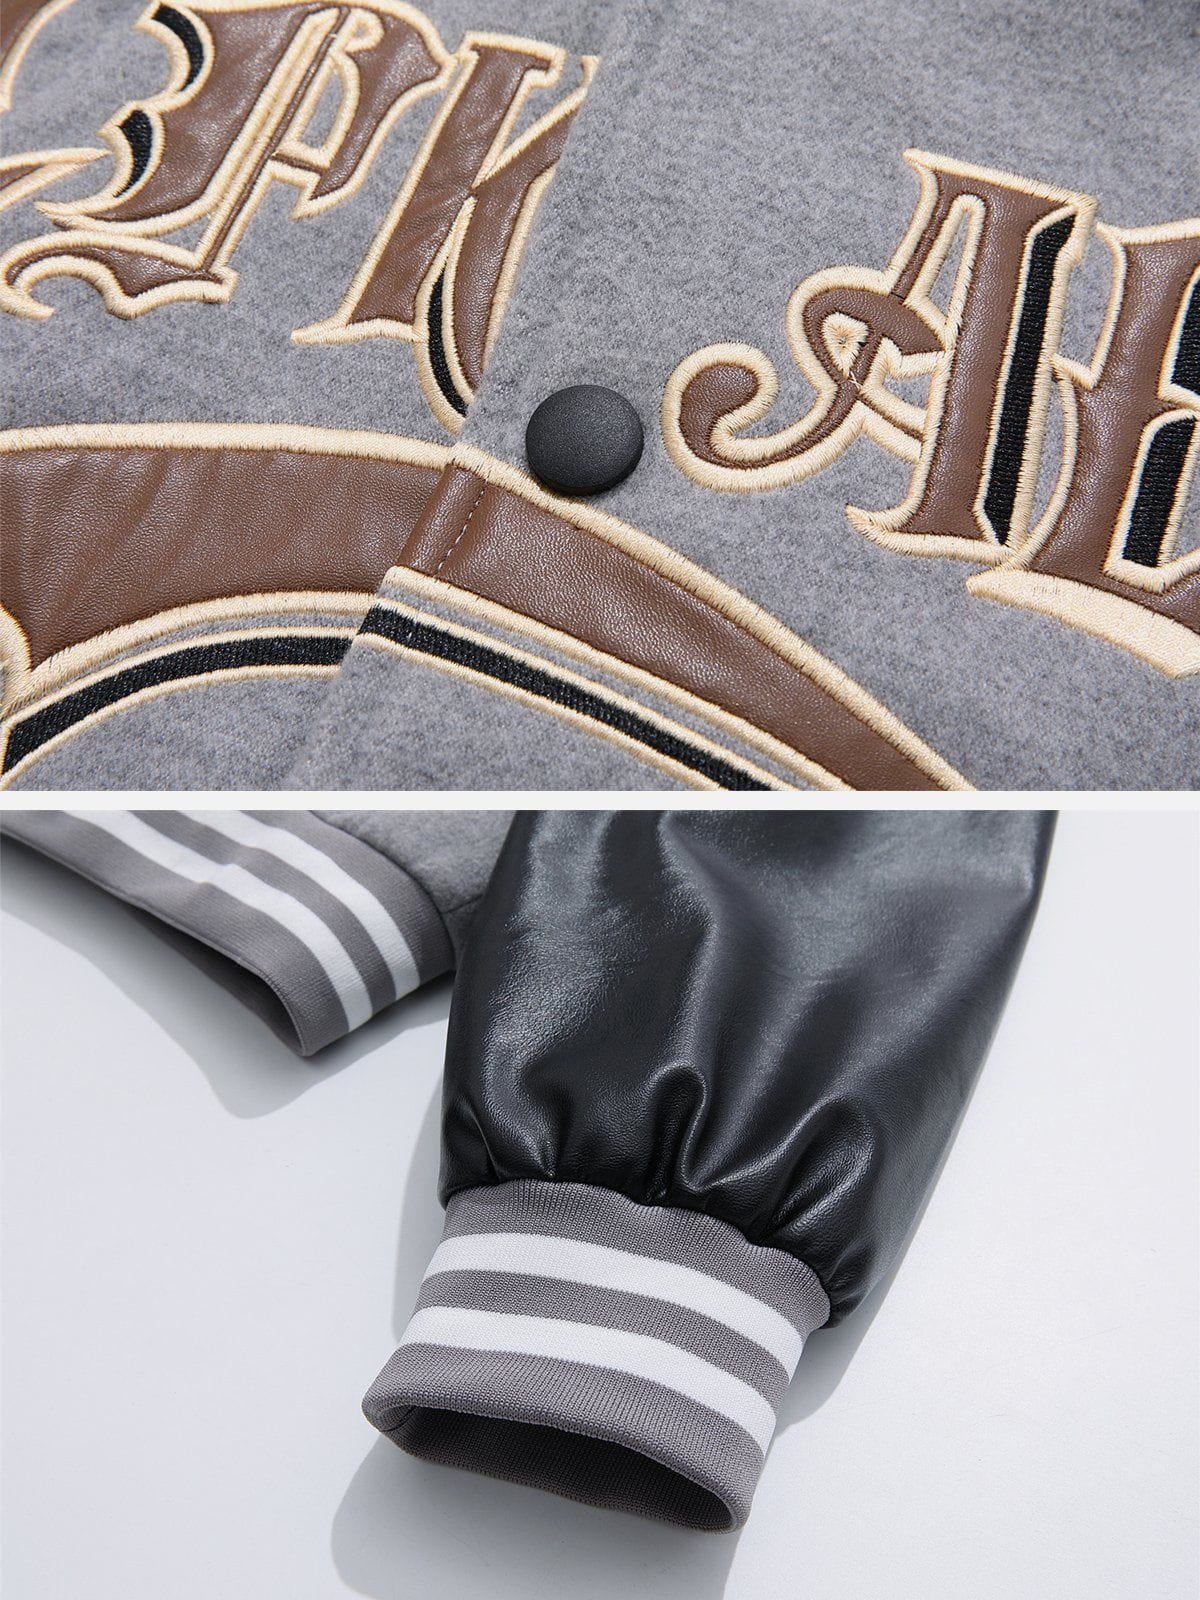 Majesda® - Embroidery Patchwork Varsity Jacket outfit ideas, streetwear fashion - majesda.com